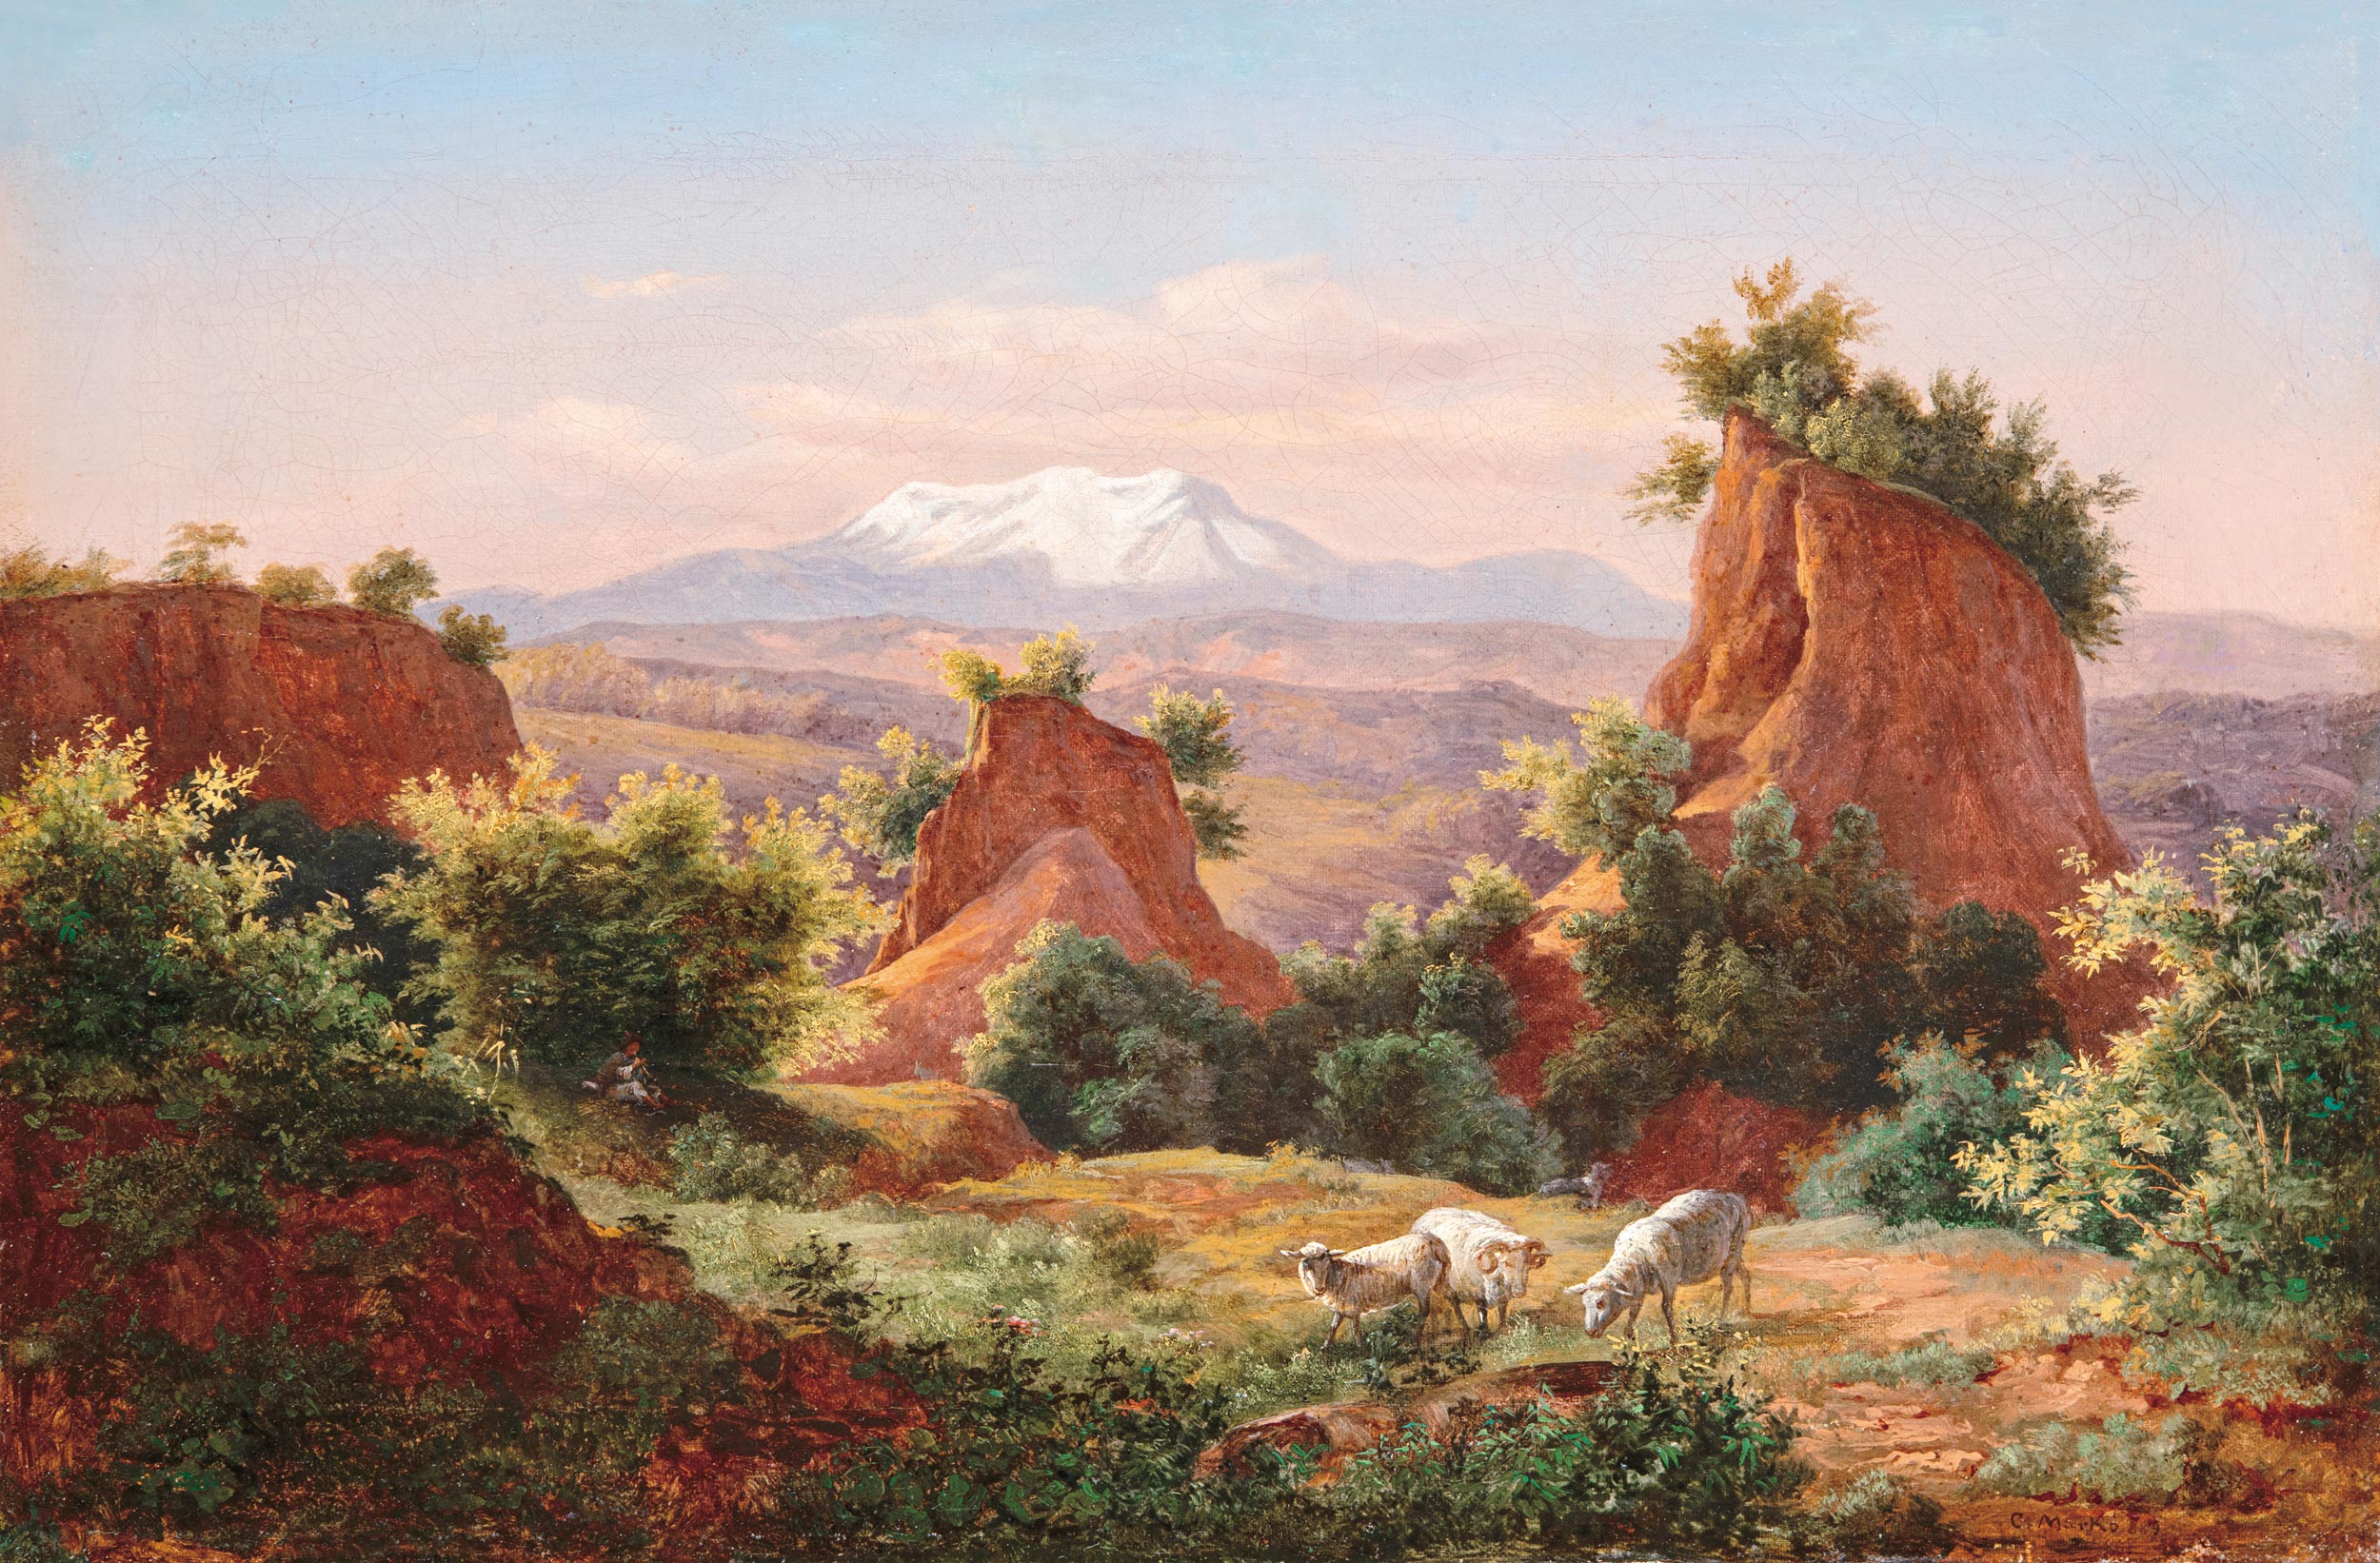 Markó Károly, Ifj. (1822 - 1891) Mountain View, 1889